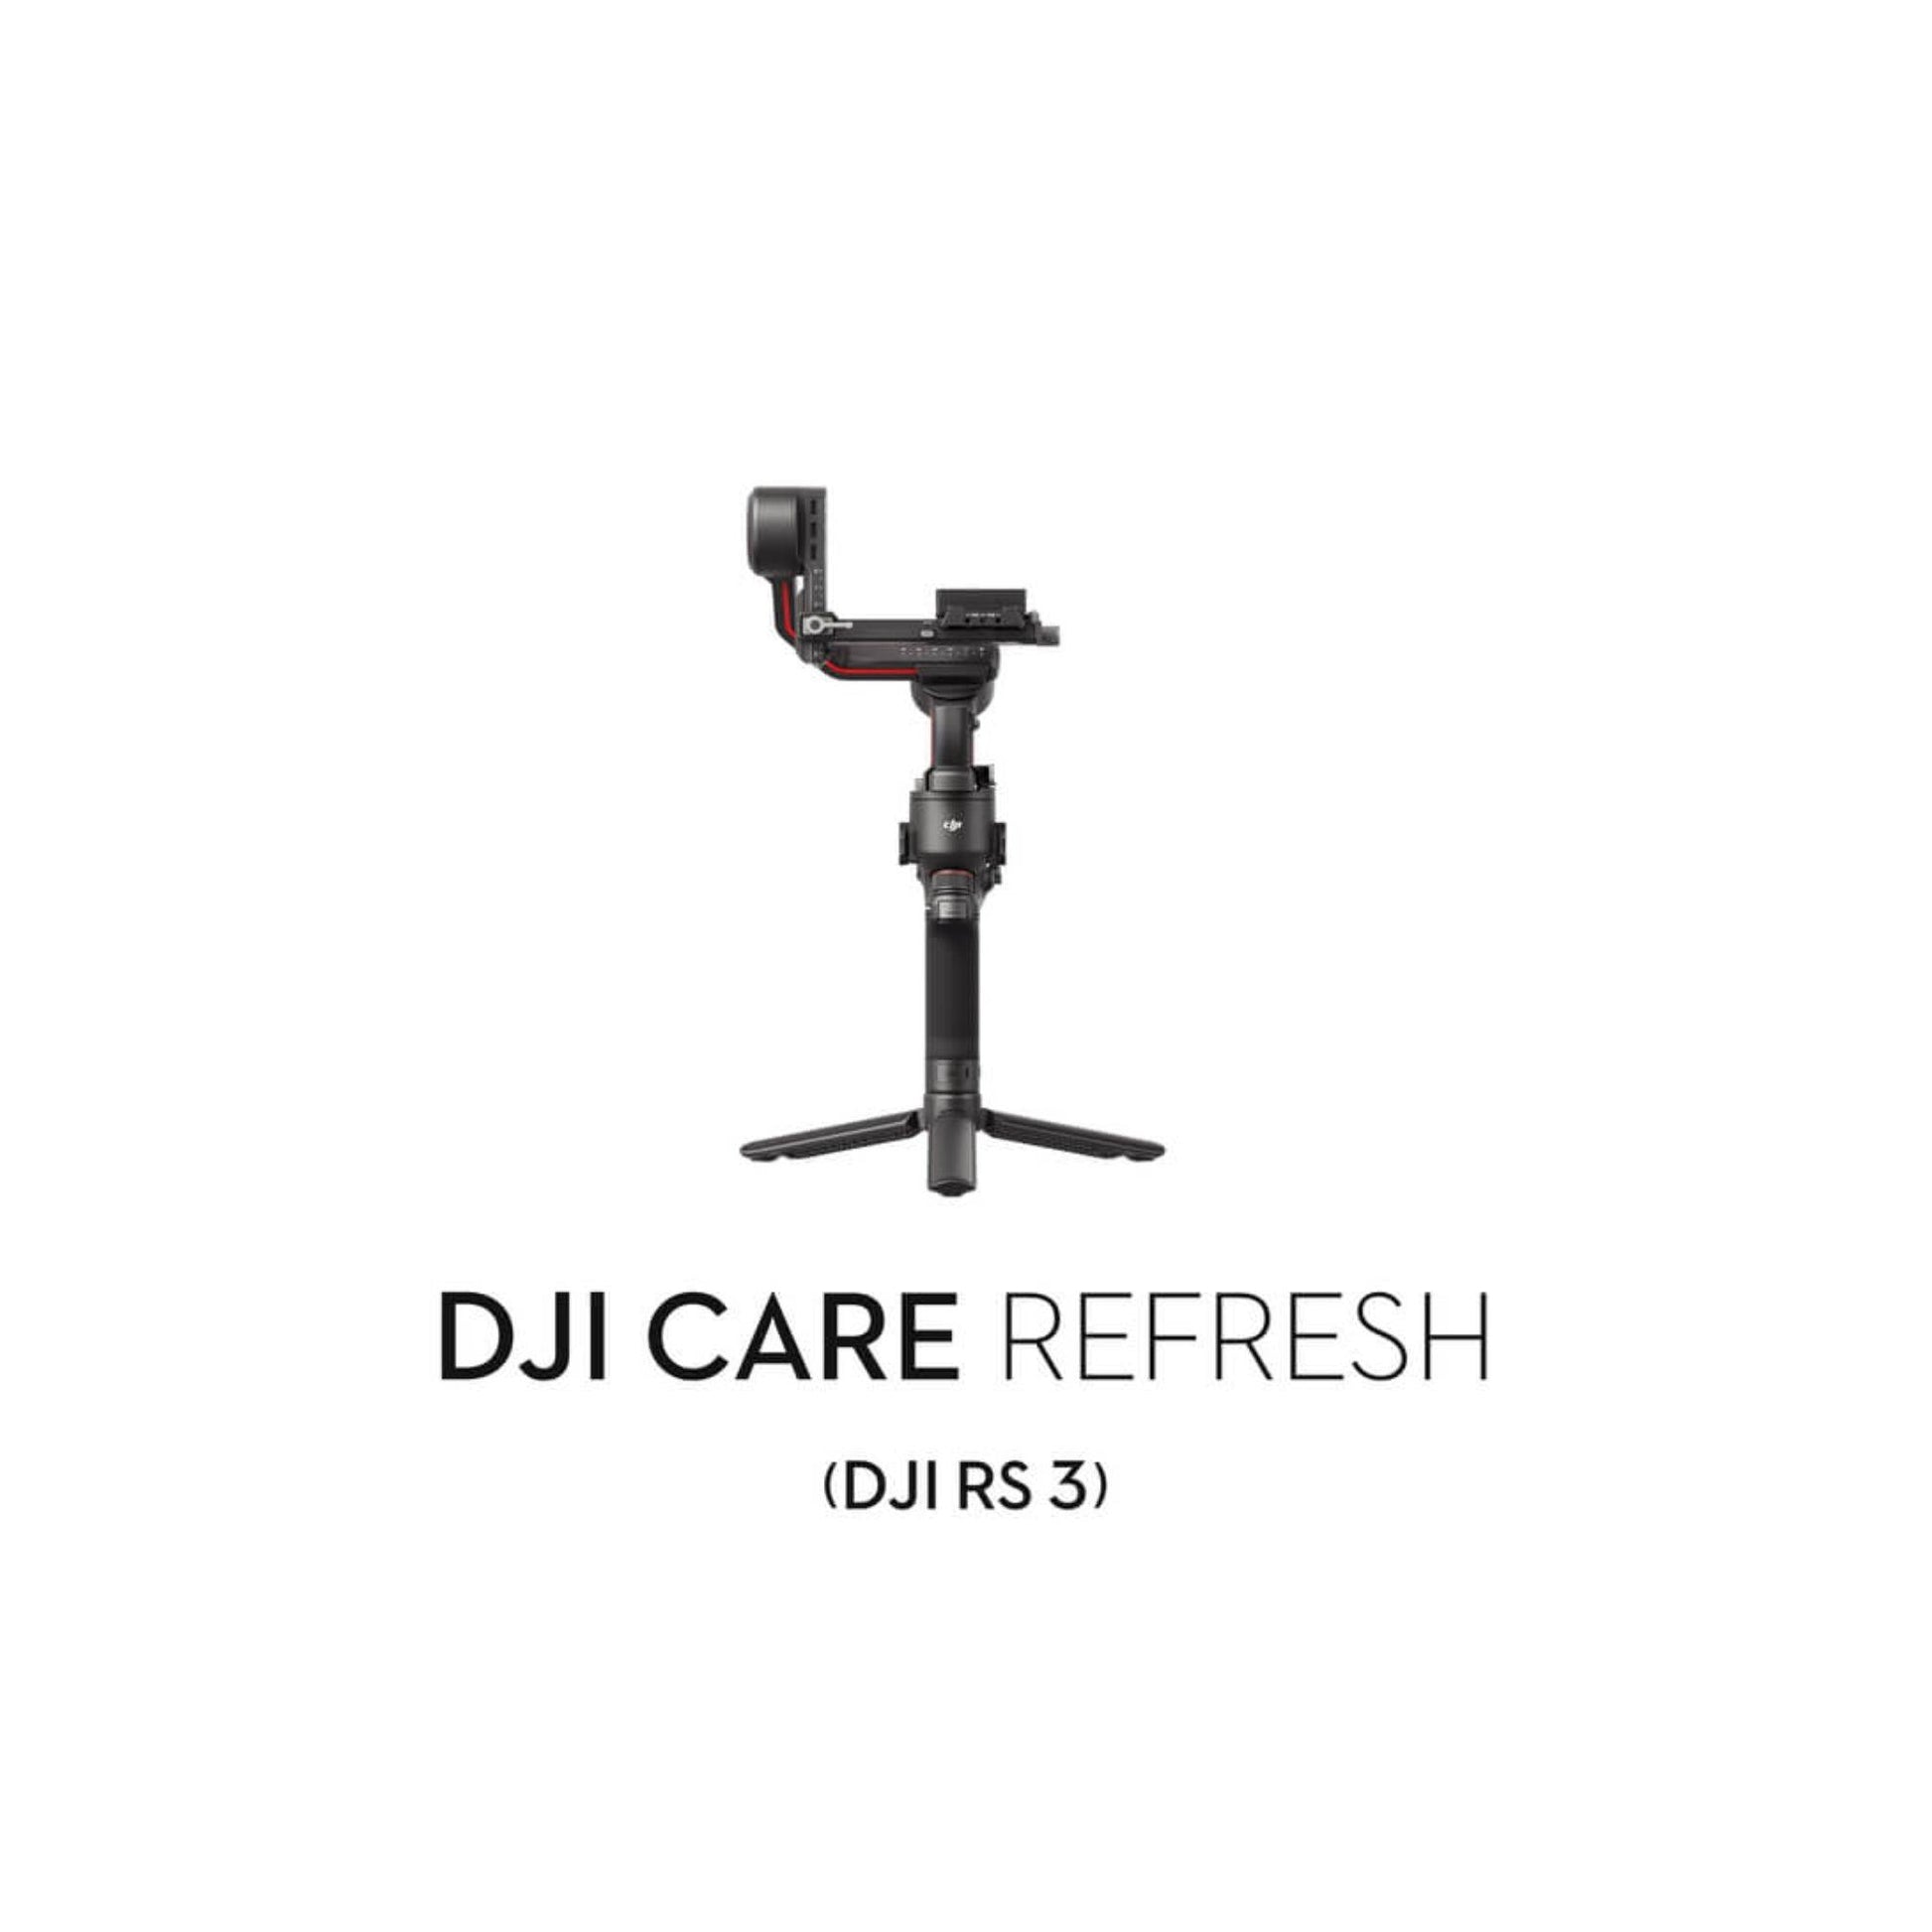 DJI Care Refresh 2-Year Plan (DJI RS 3) - Silverlight Optics